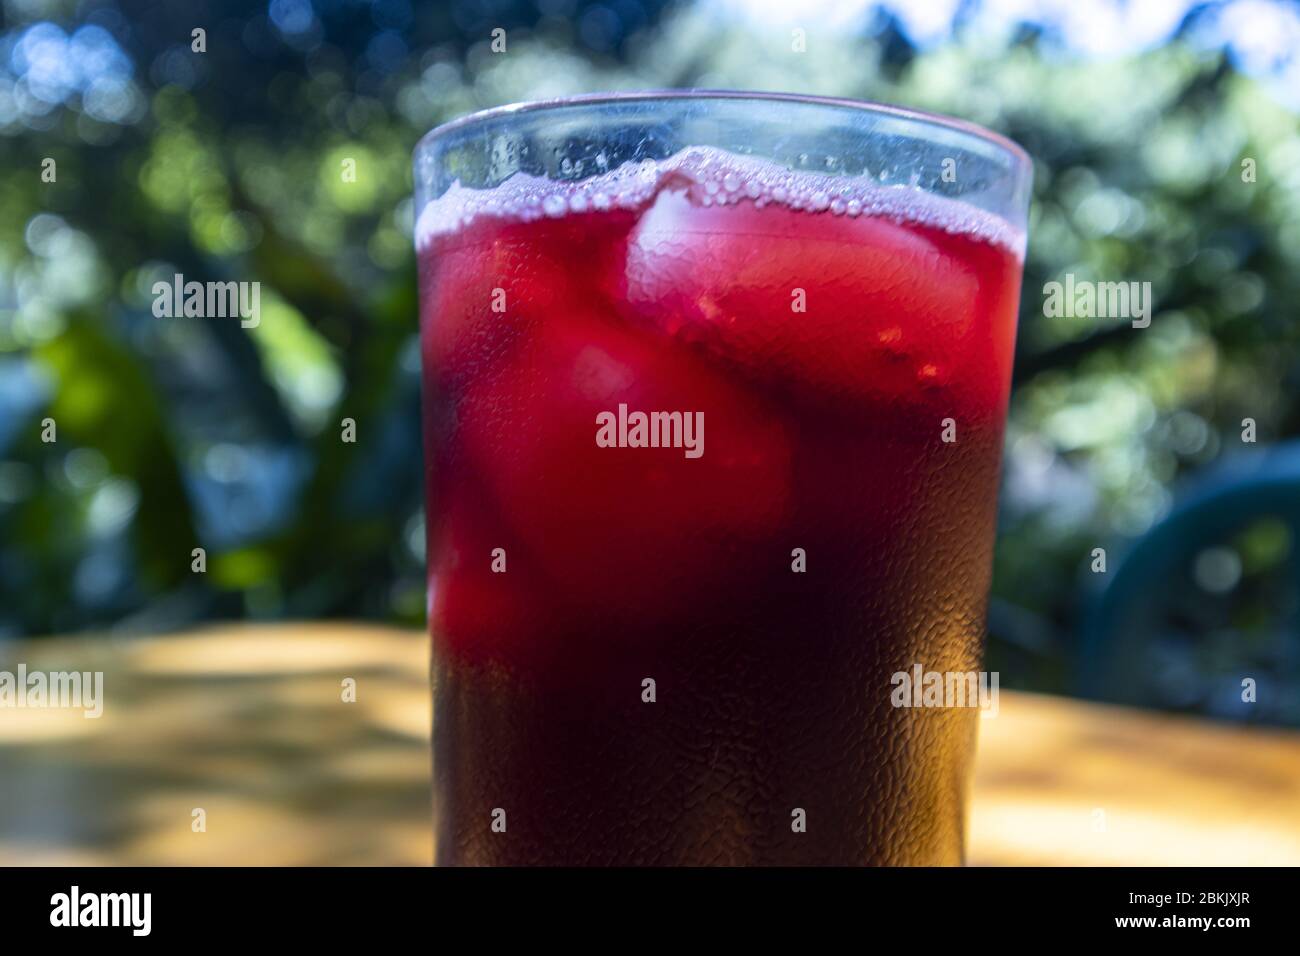 flor de jamaica drink with ice Stock Photo